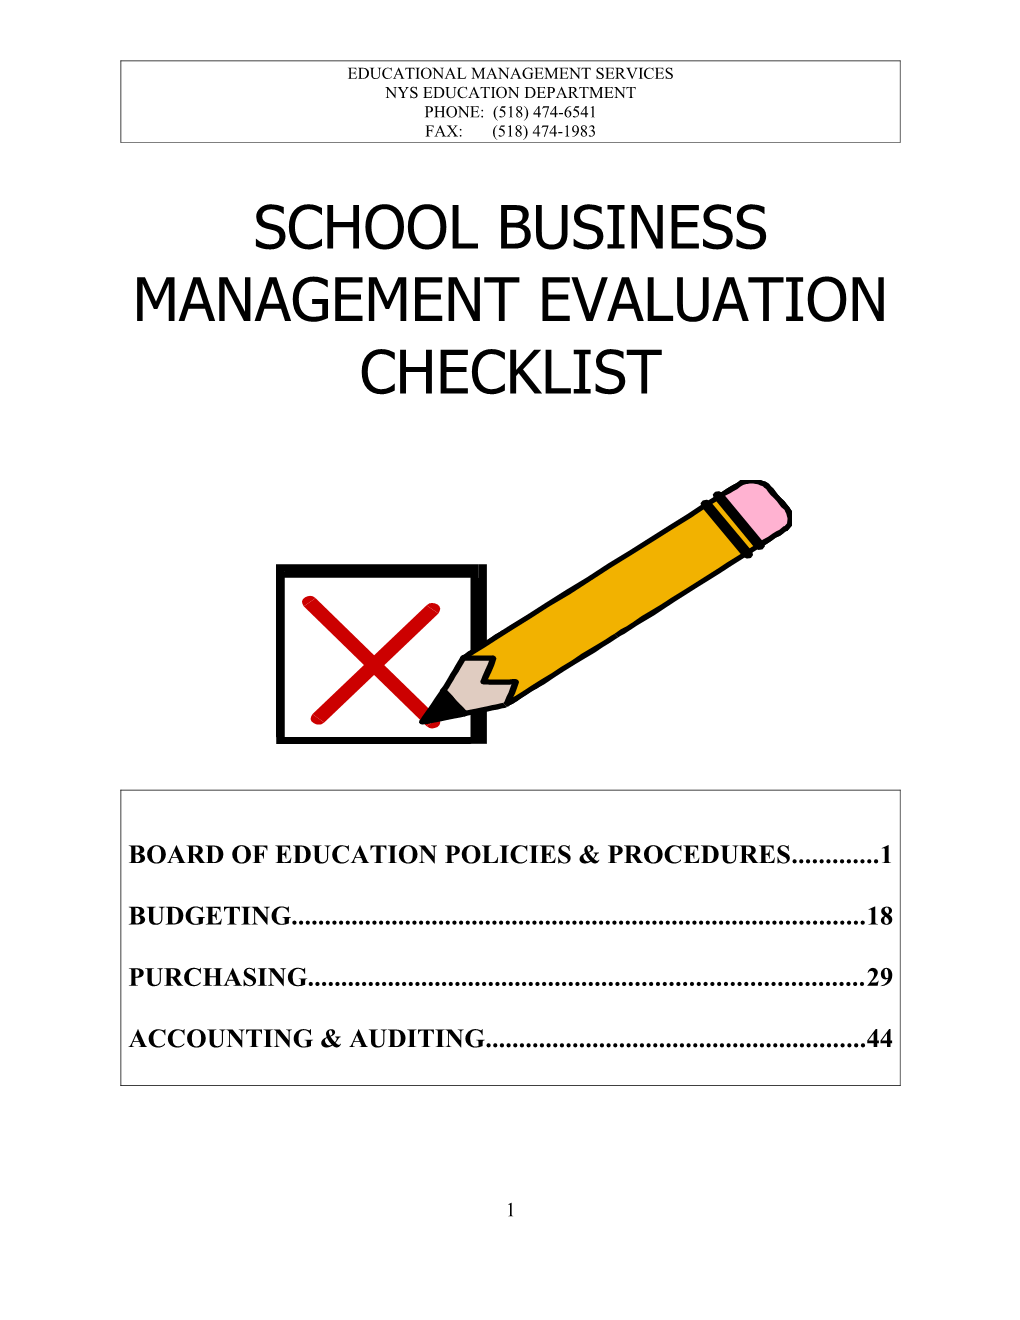 School Business Management Evaluation Checklist